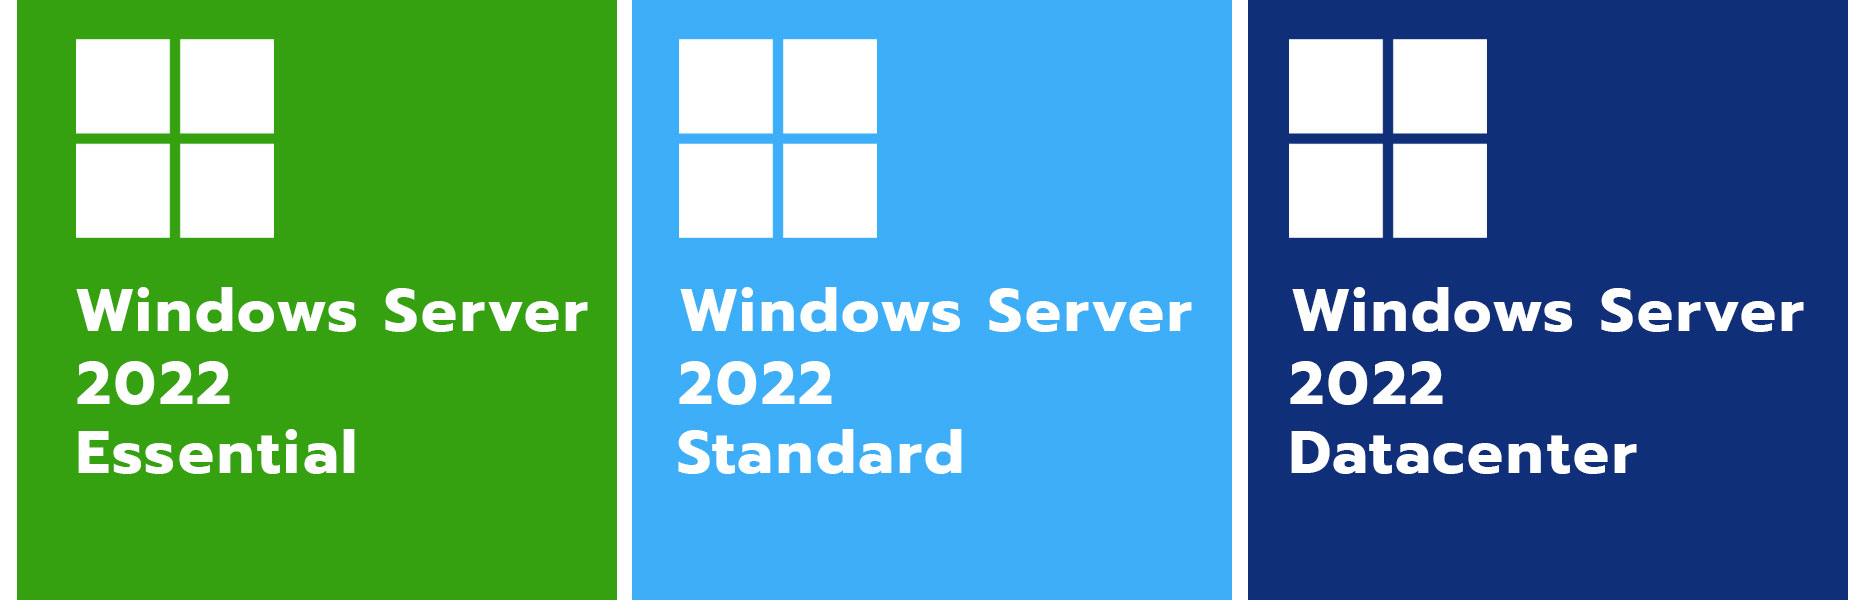 Windows-Server-2022-Family, ลิขสิทธิ์การใช้งาน Windows Server